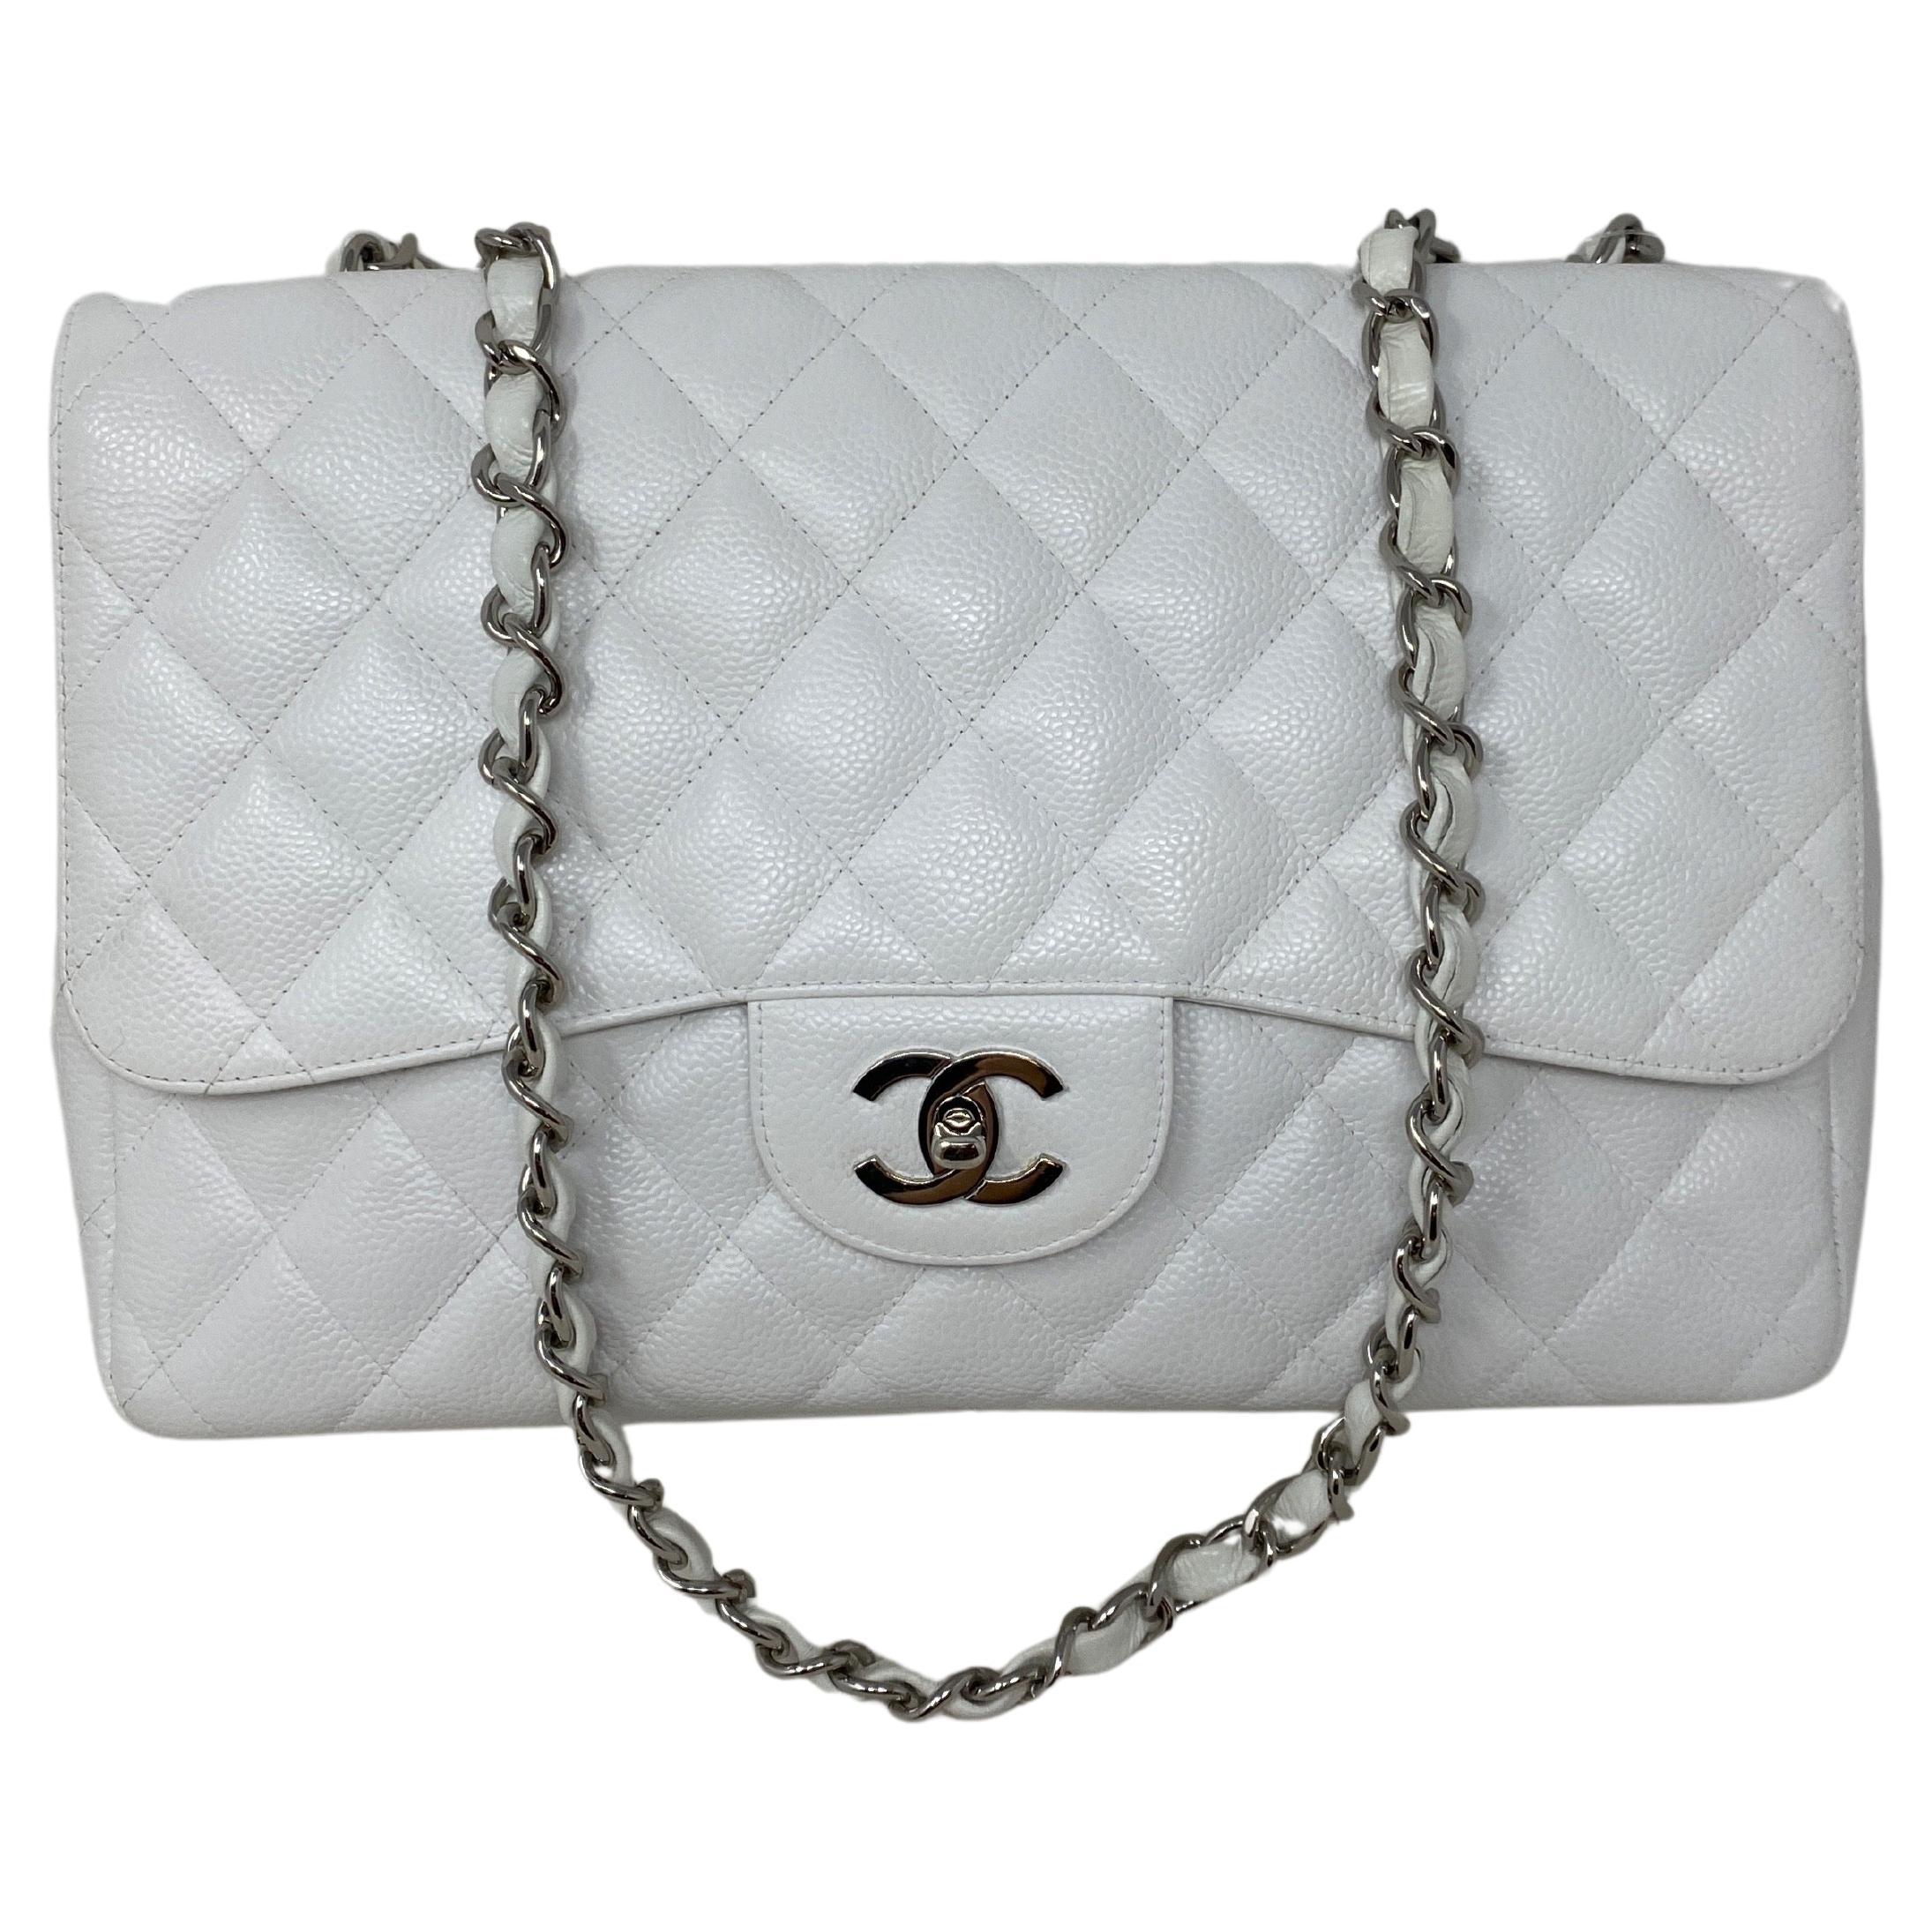 Chanel White Jumbo Single Flap Classic Bag